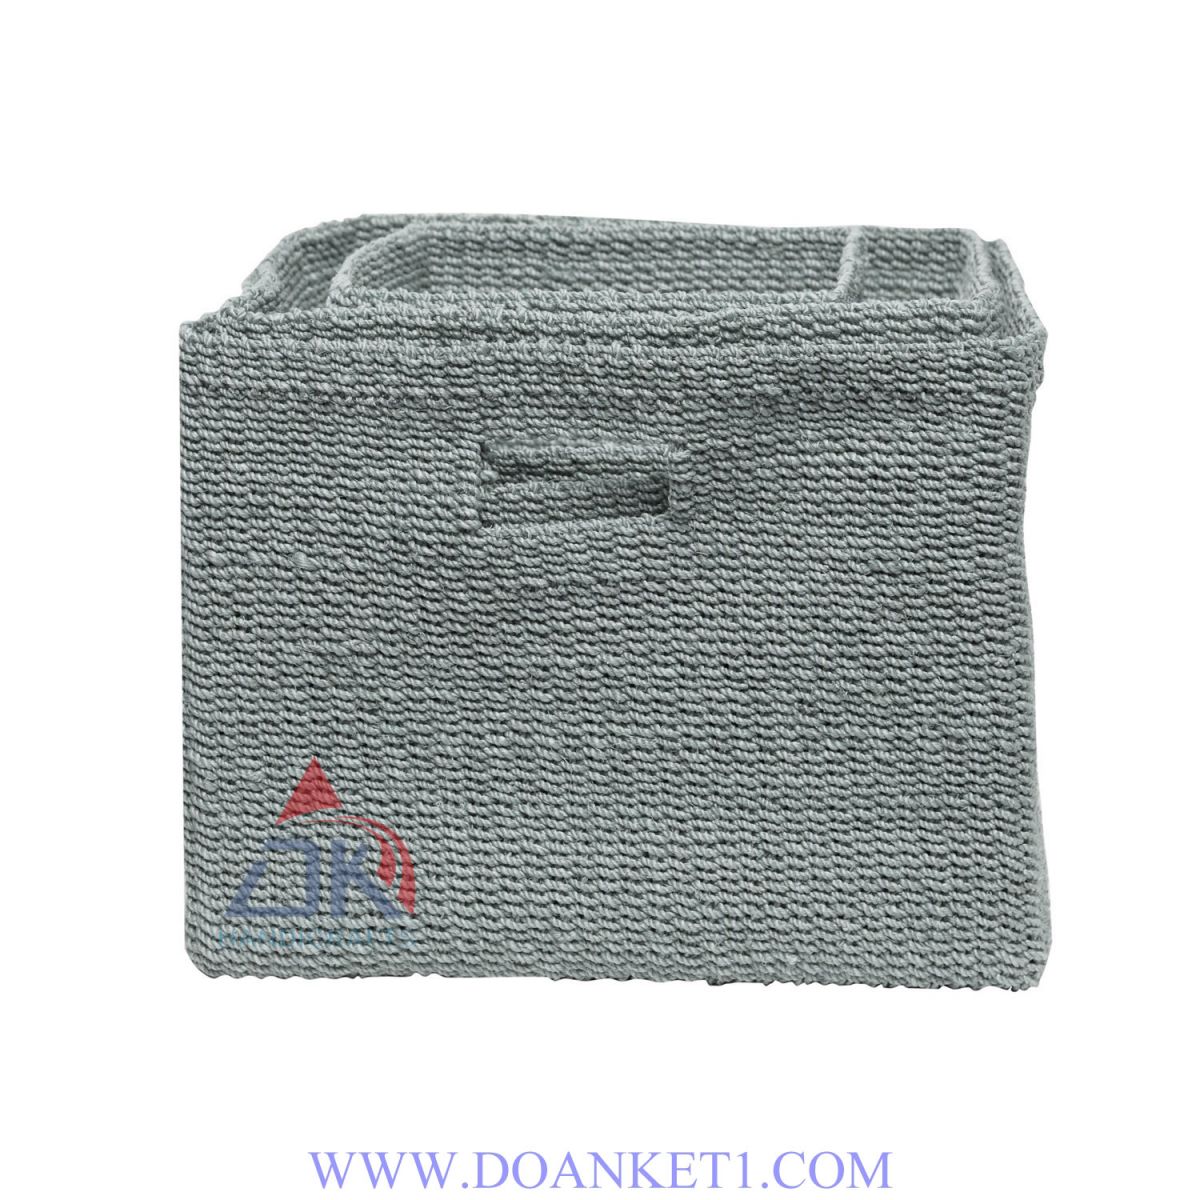 Textile Basket # DK137